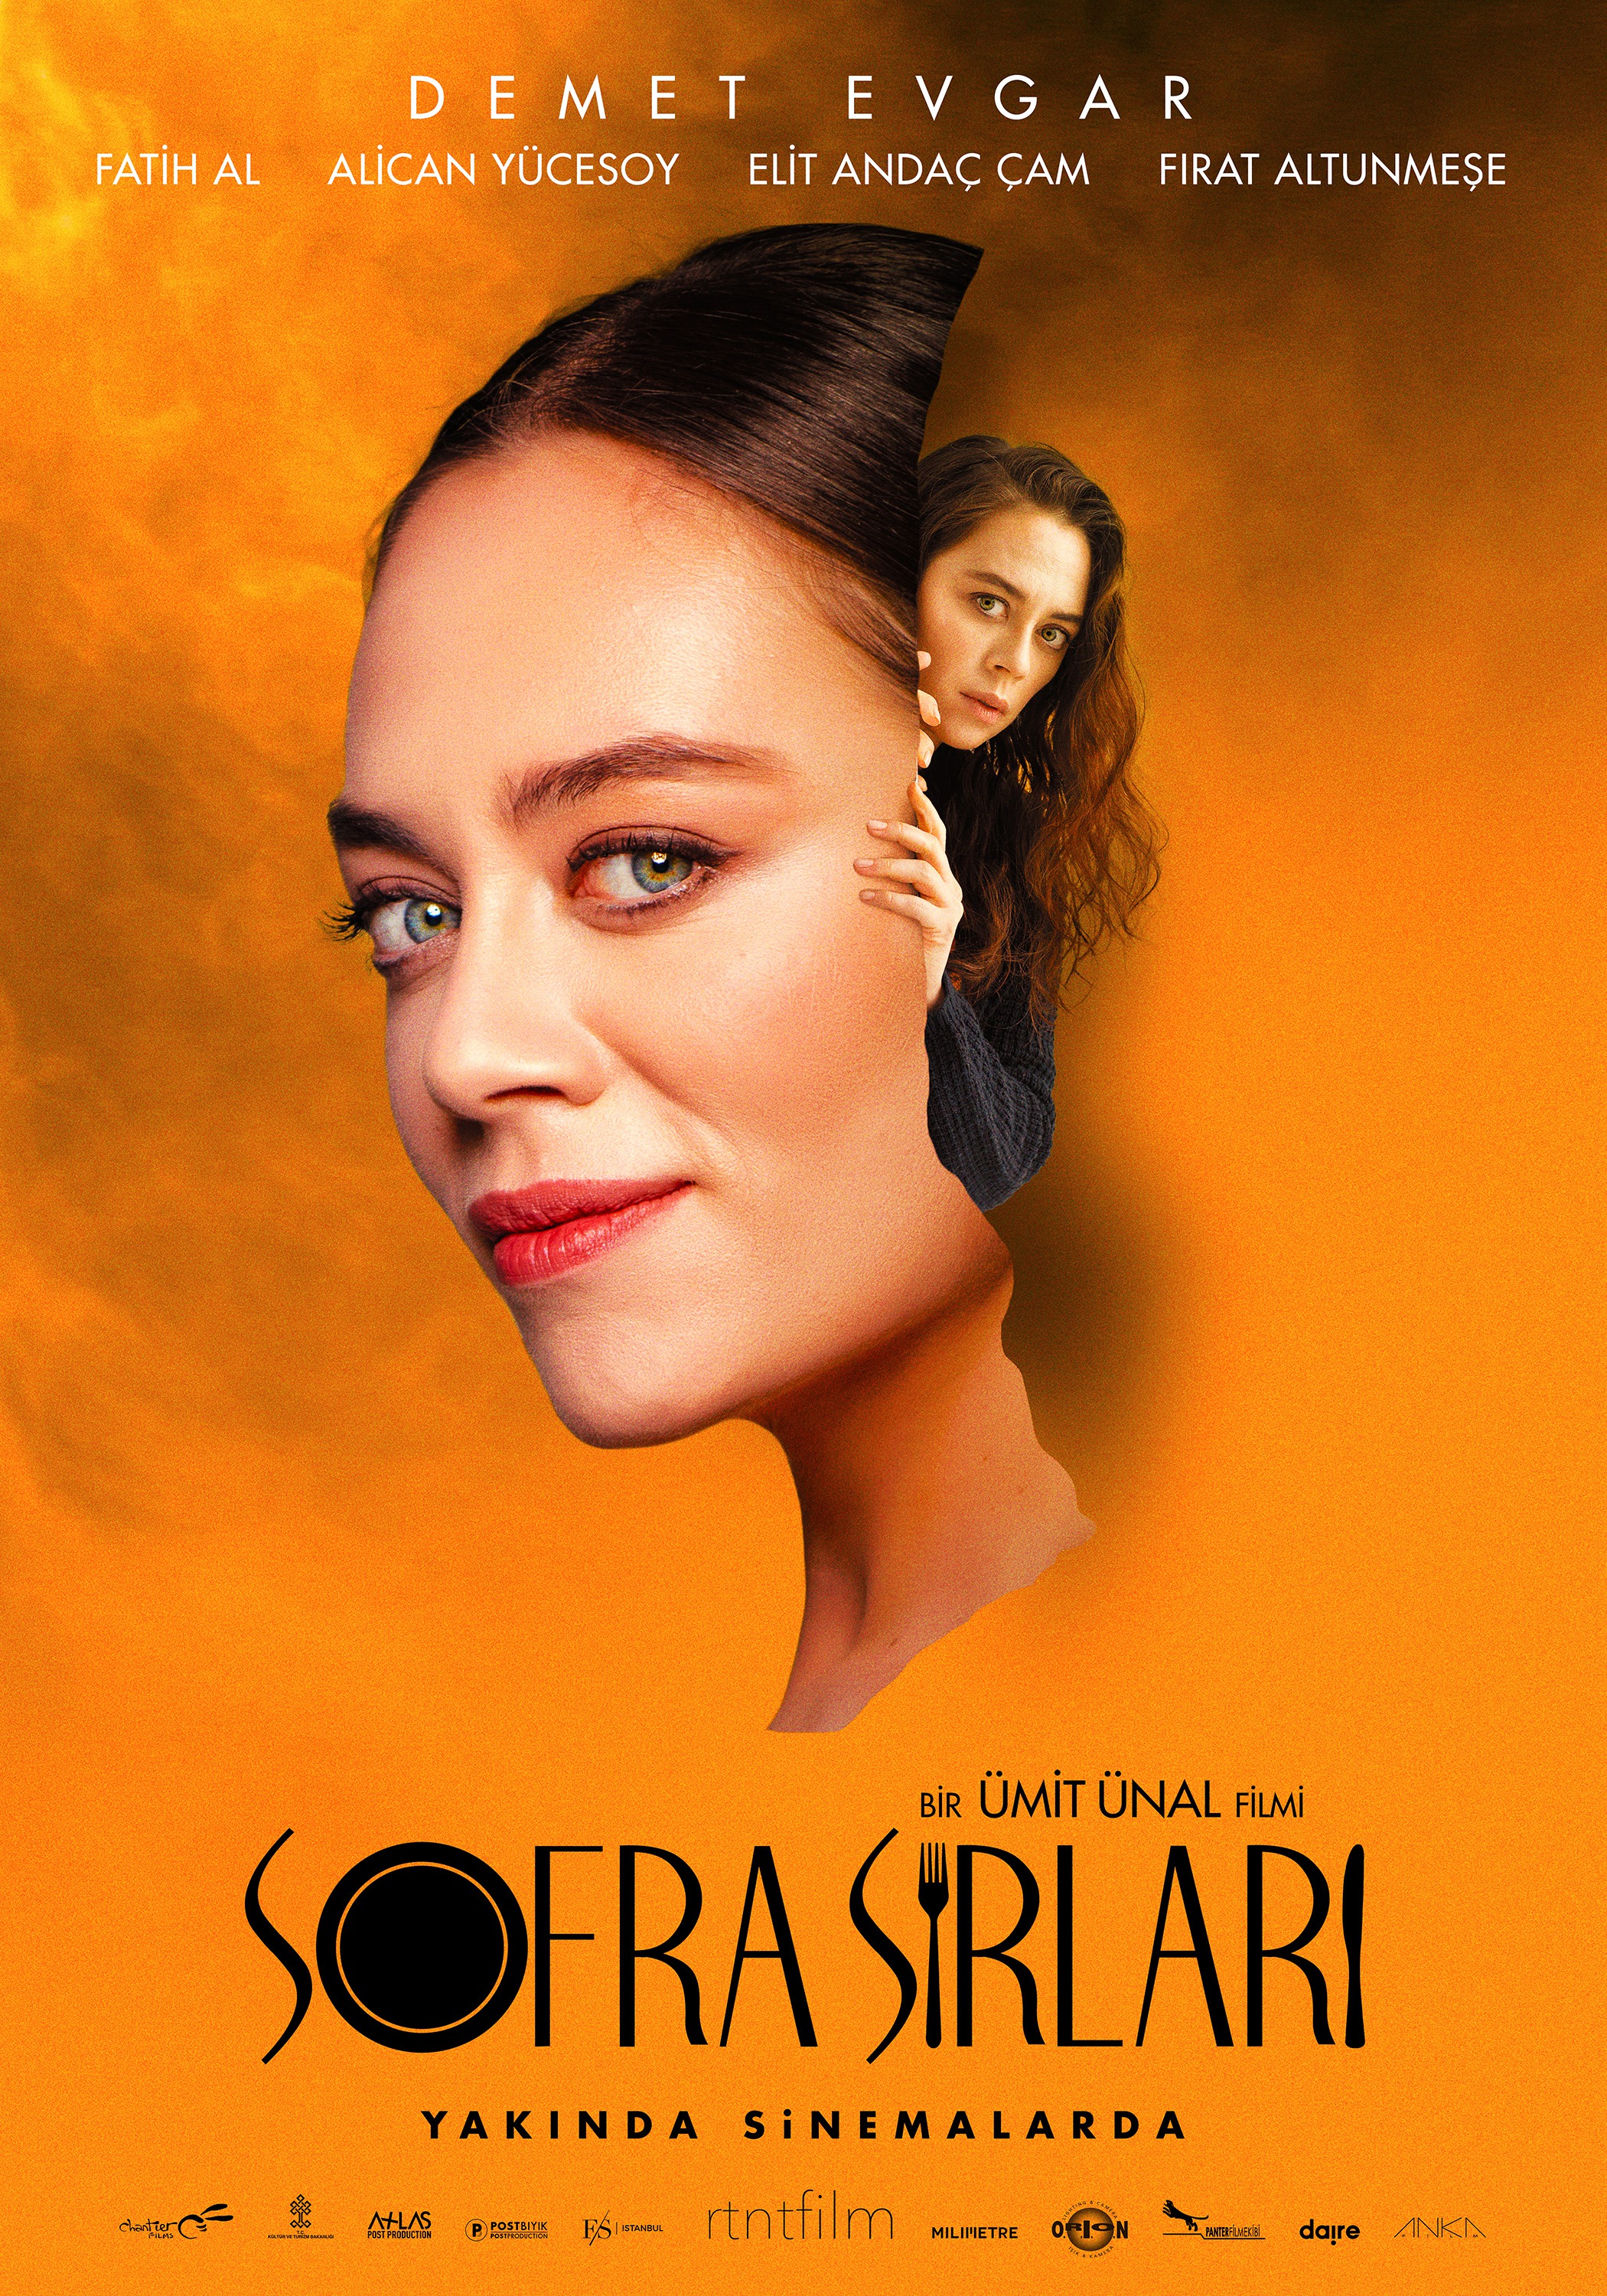 Mega Sized Movie Poster Image for Sofra sirlari 